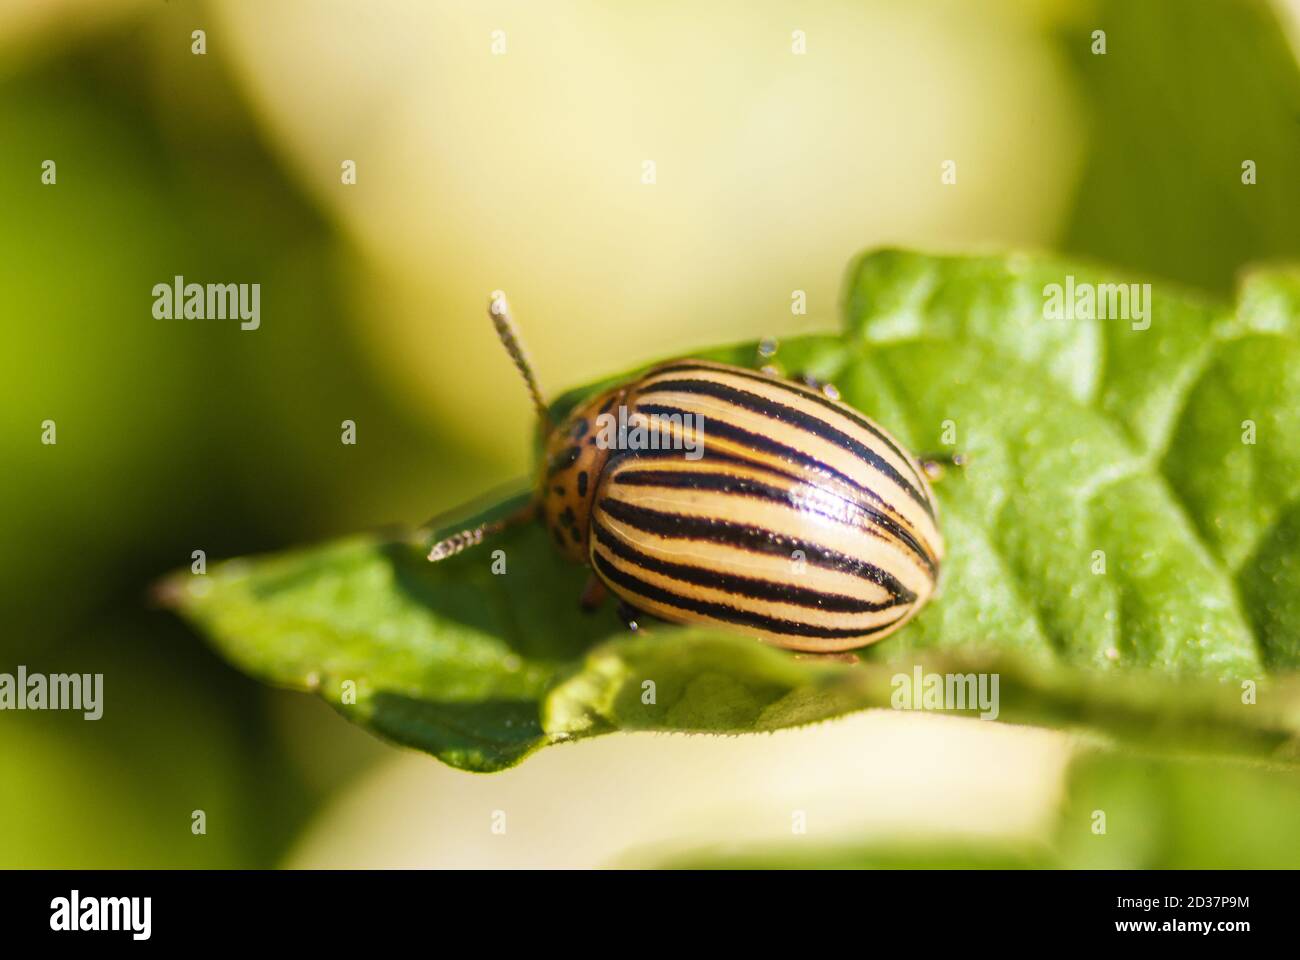 Potato beetle bug eating potato leaf at garden harvesting season Stock Photo